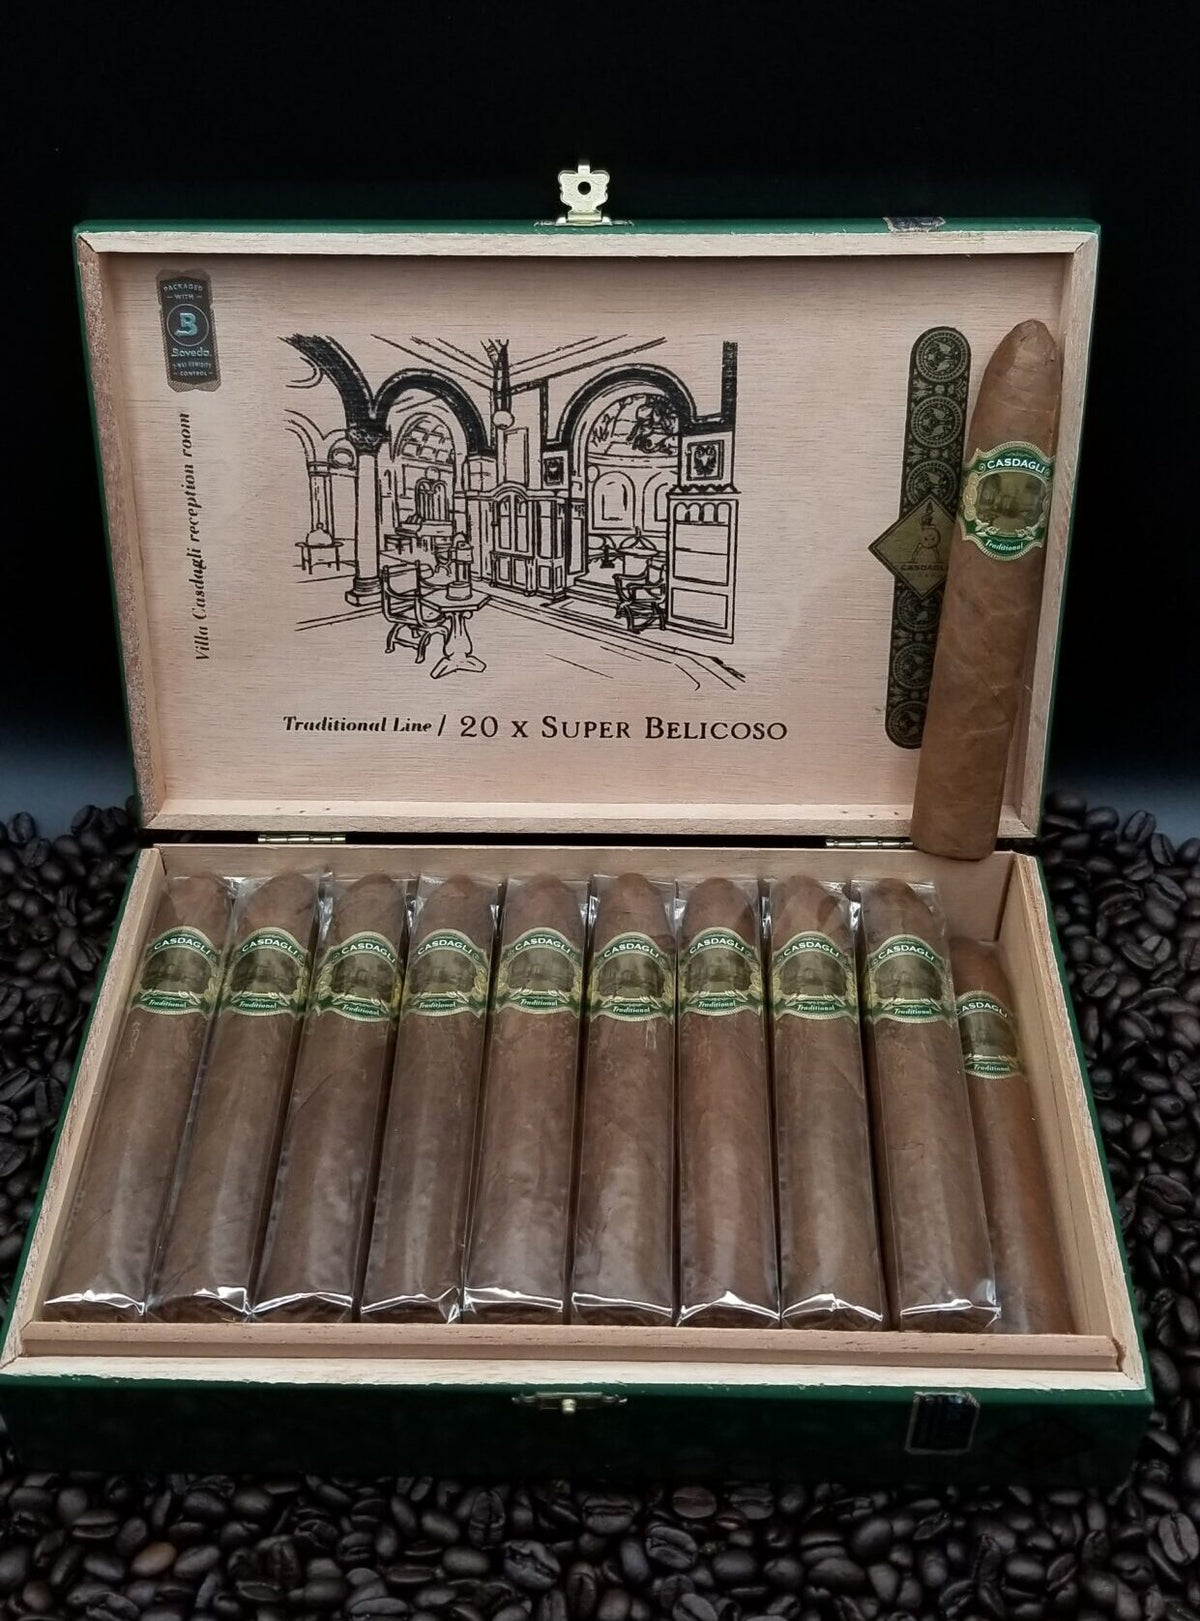 Casdagli Super Belicoso cigars supplied by Sir Louis Cigars